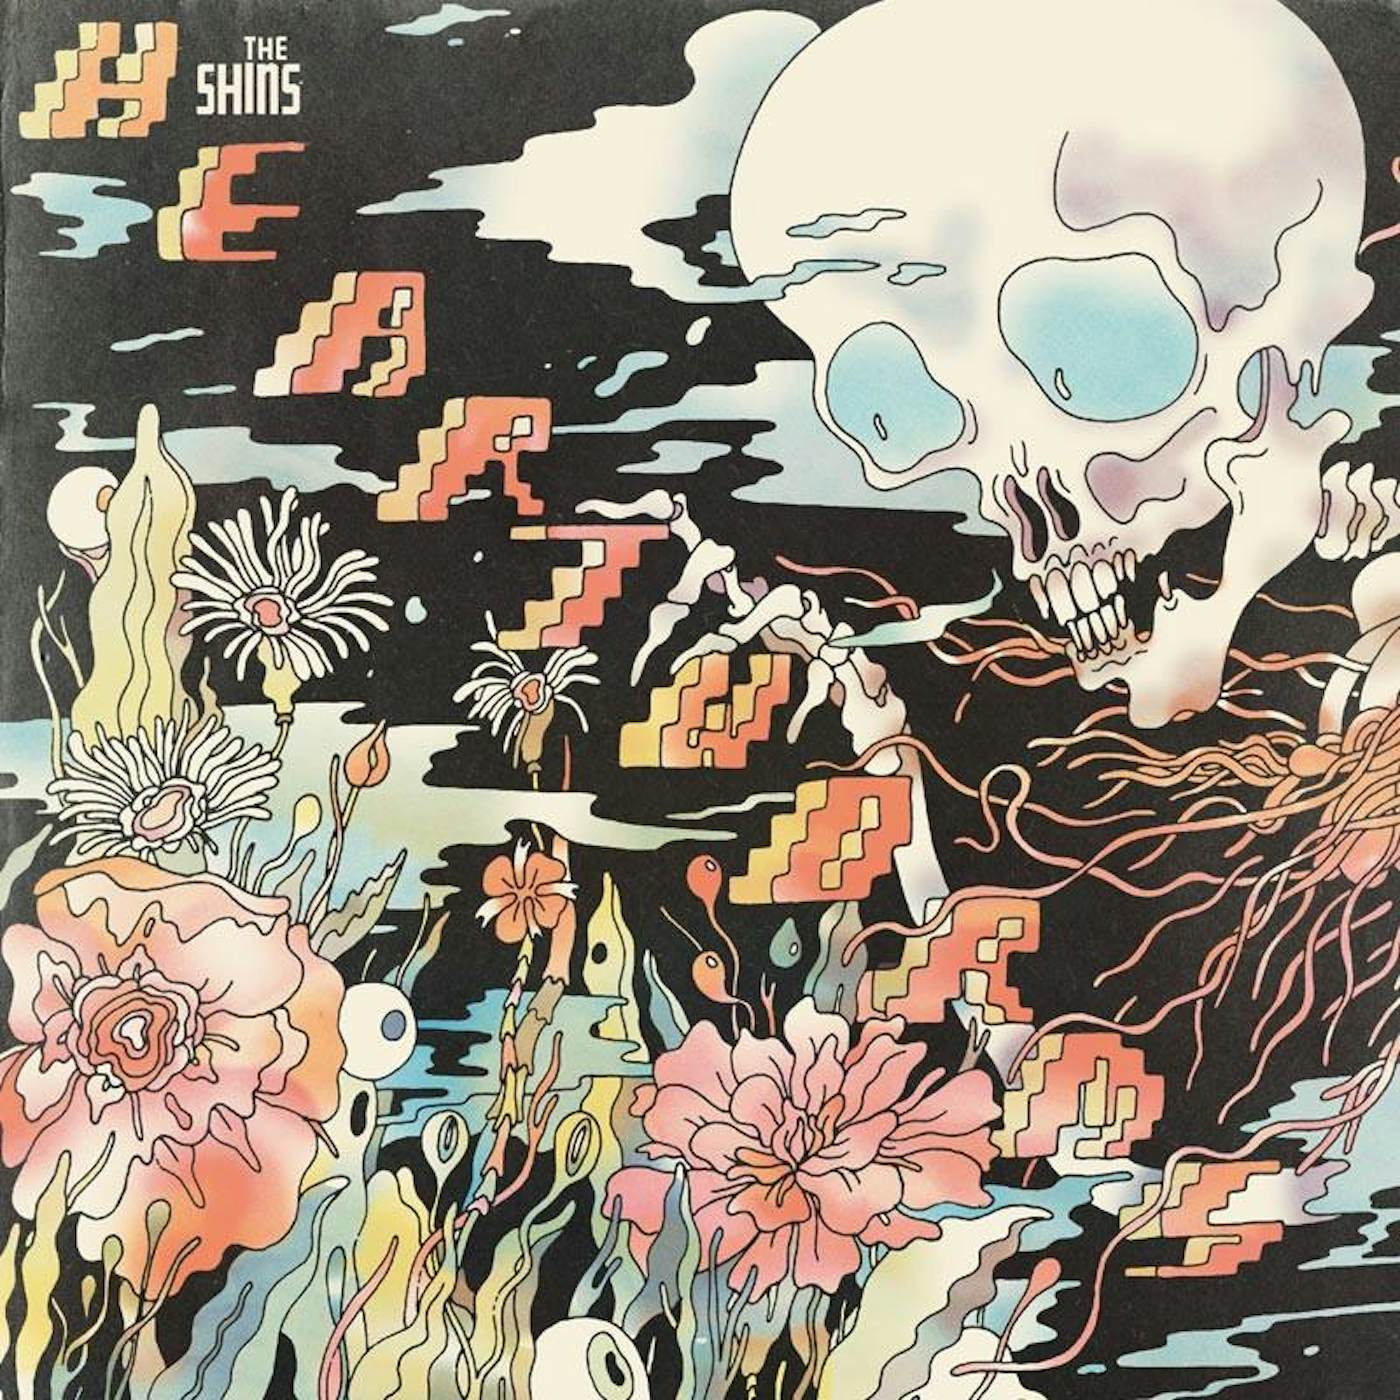 THE SHINS HEATWORMS LP (Vinyl)